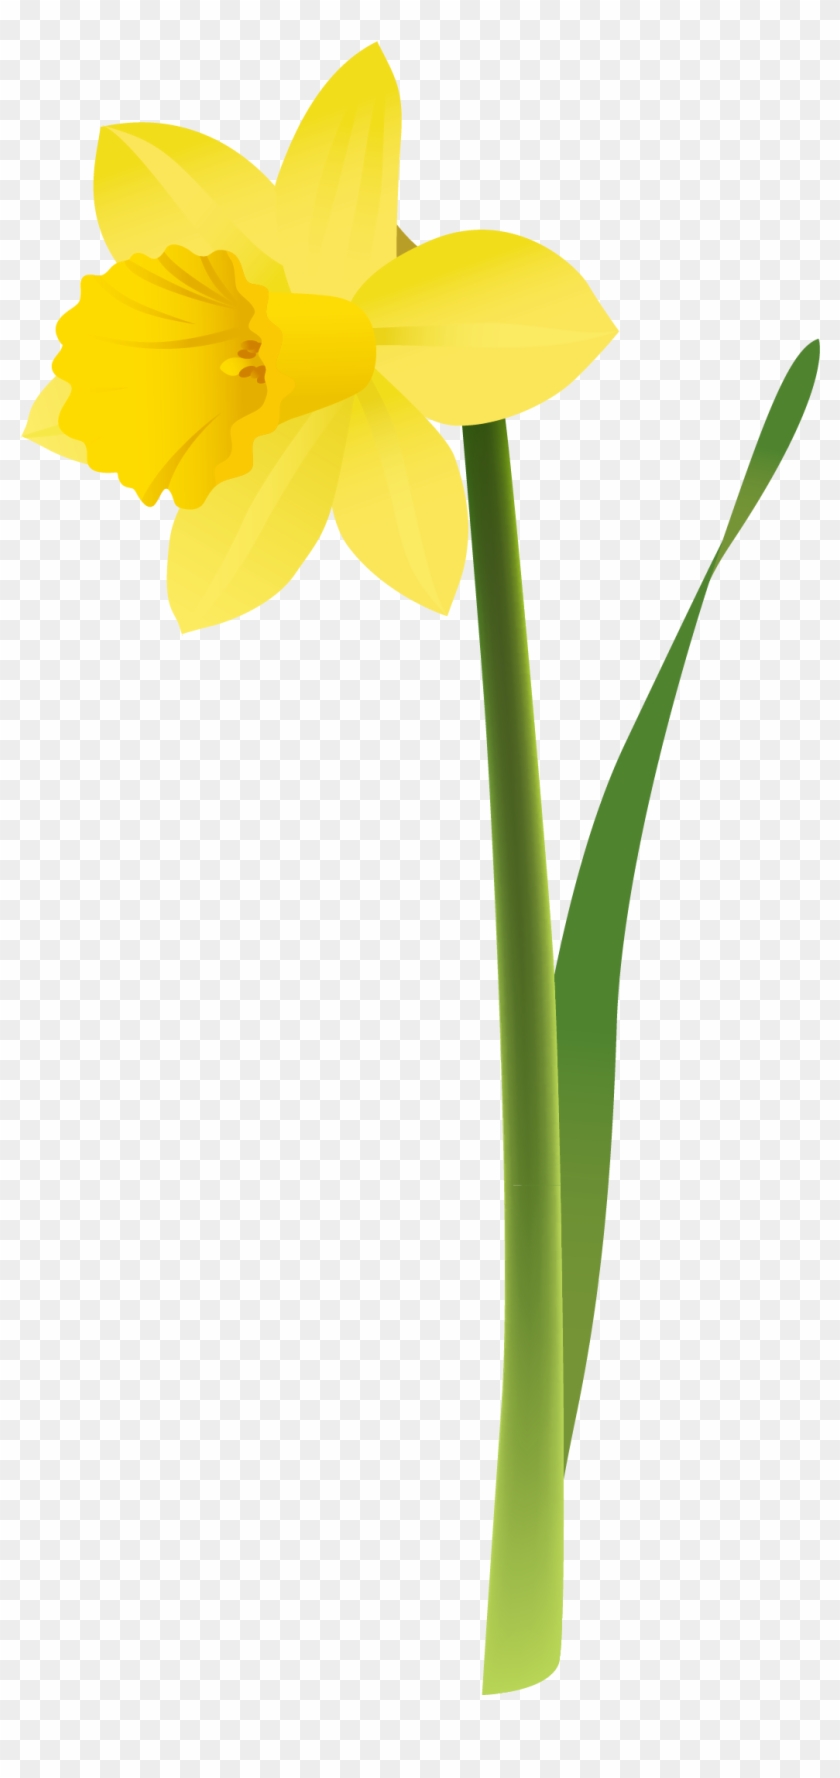 Daffodil clipart jonquil, Daffodil jonquil Transparent FREE for ...